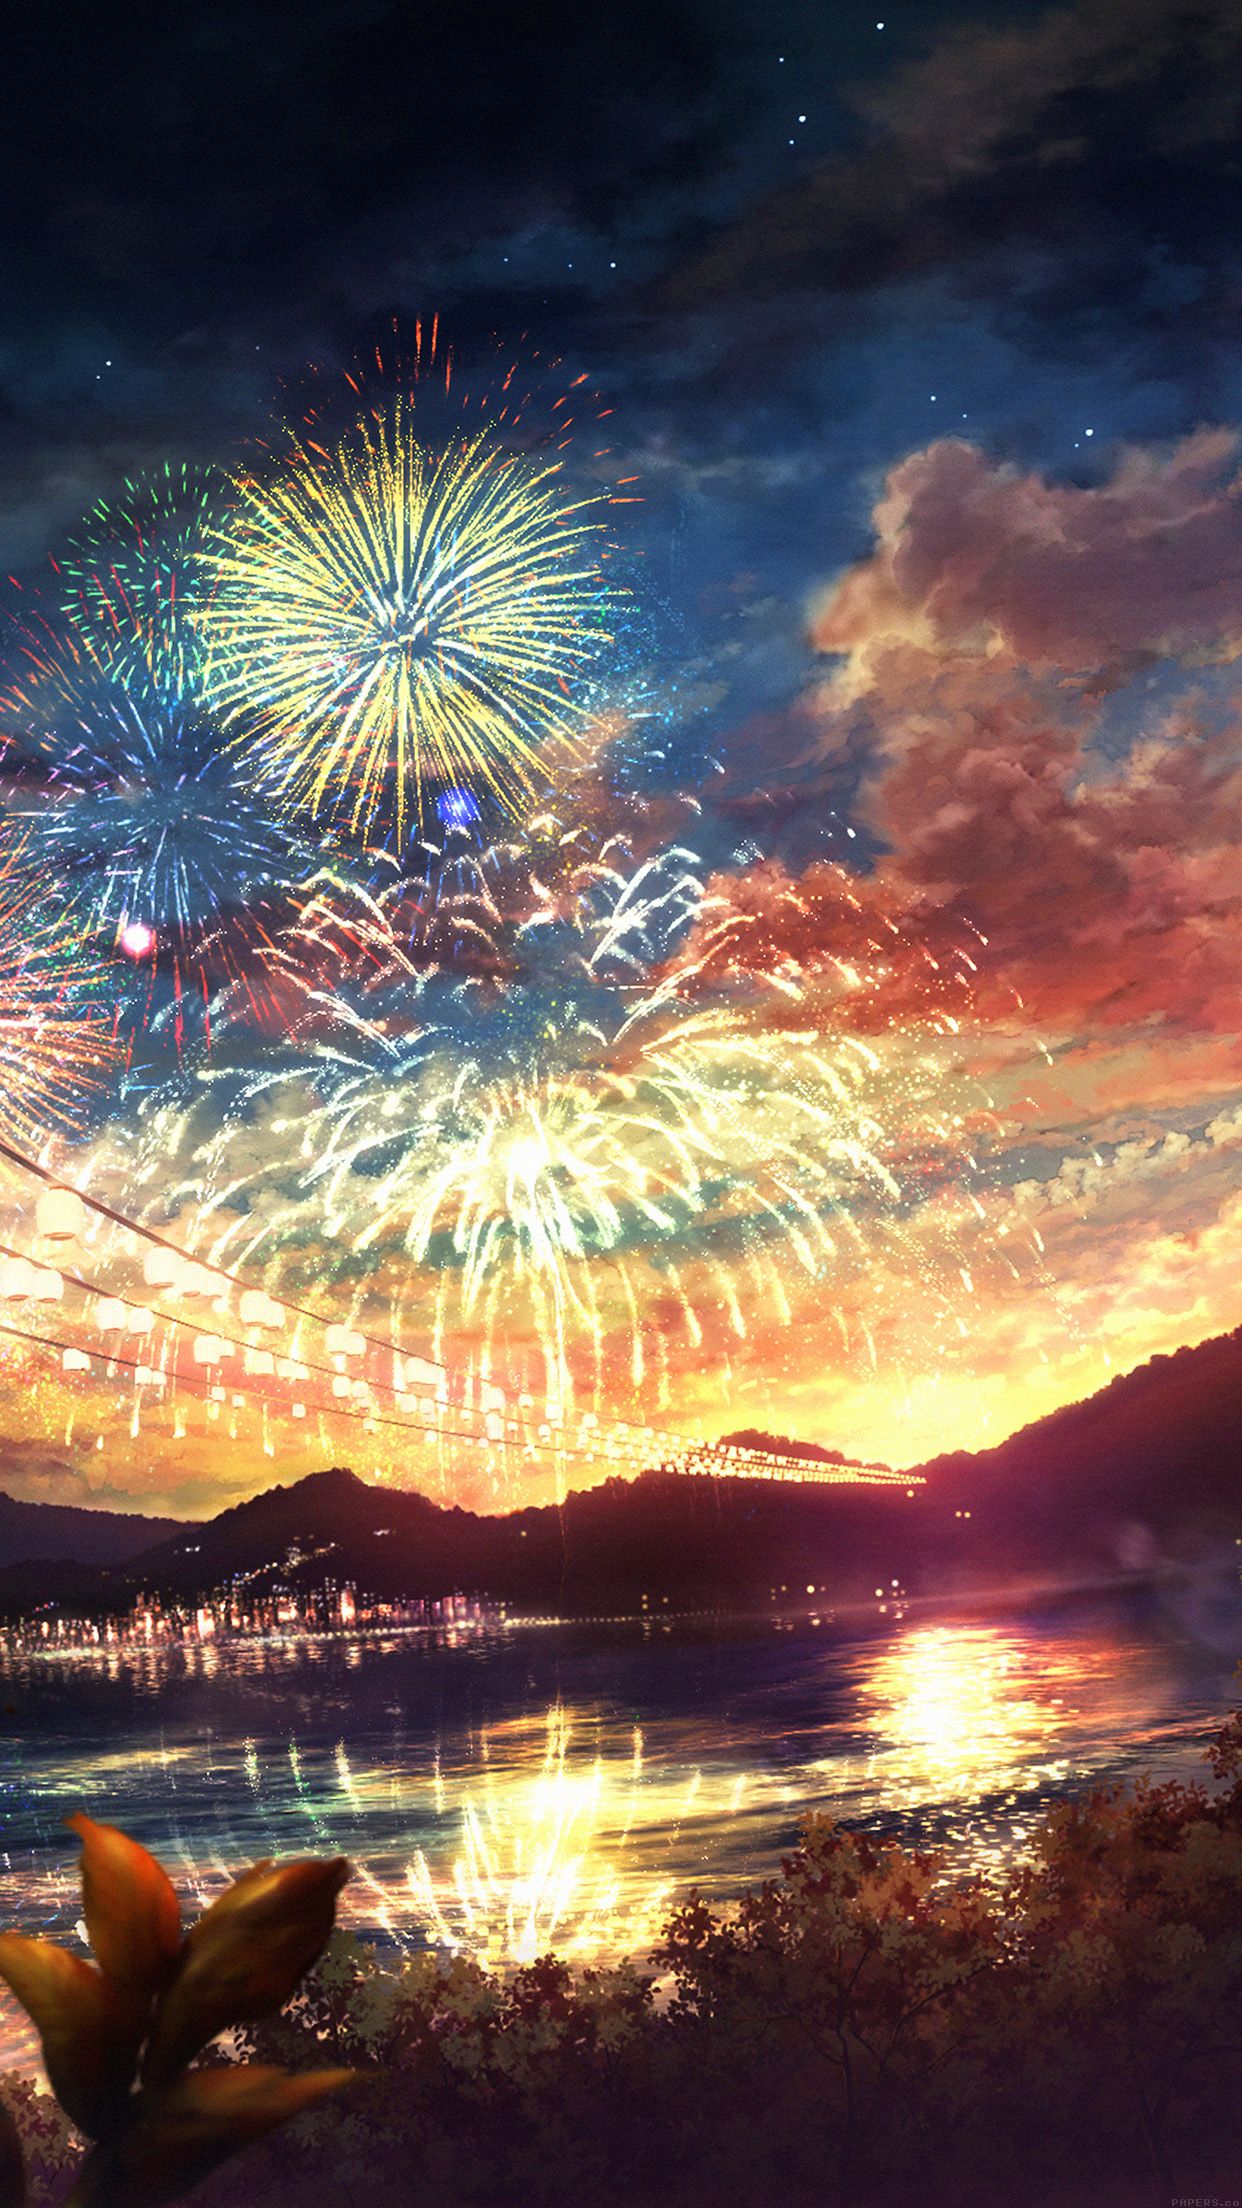 iPhone X wallpaper. firework dark night anime art illust